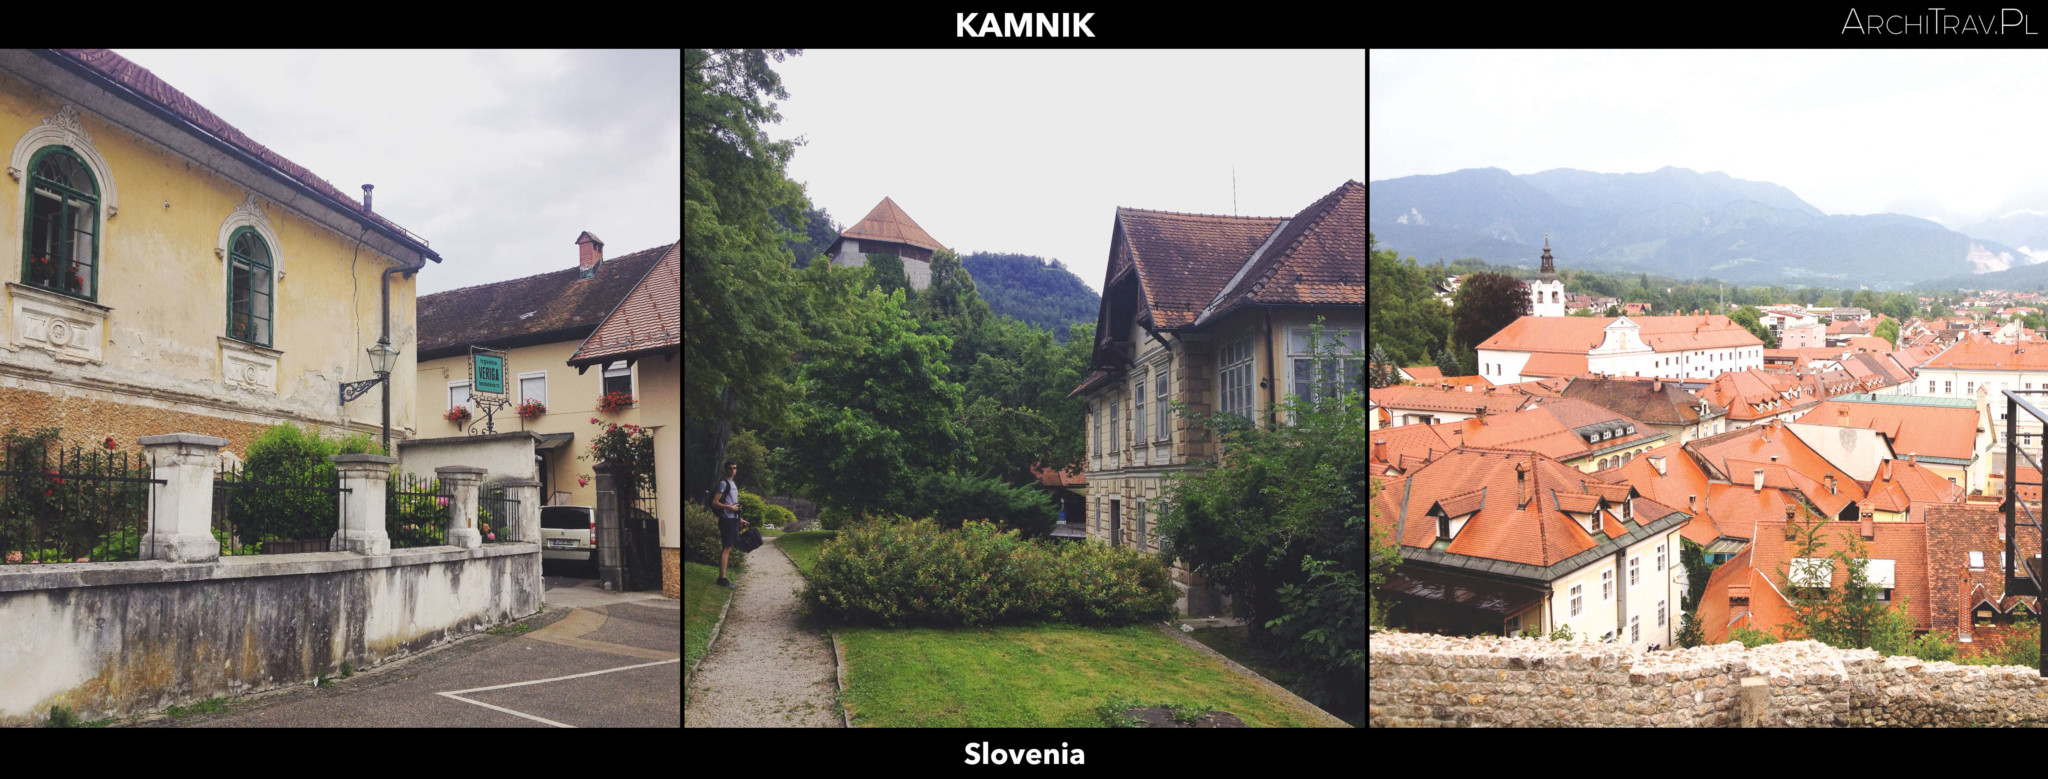 Slowenia Kamnik